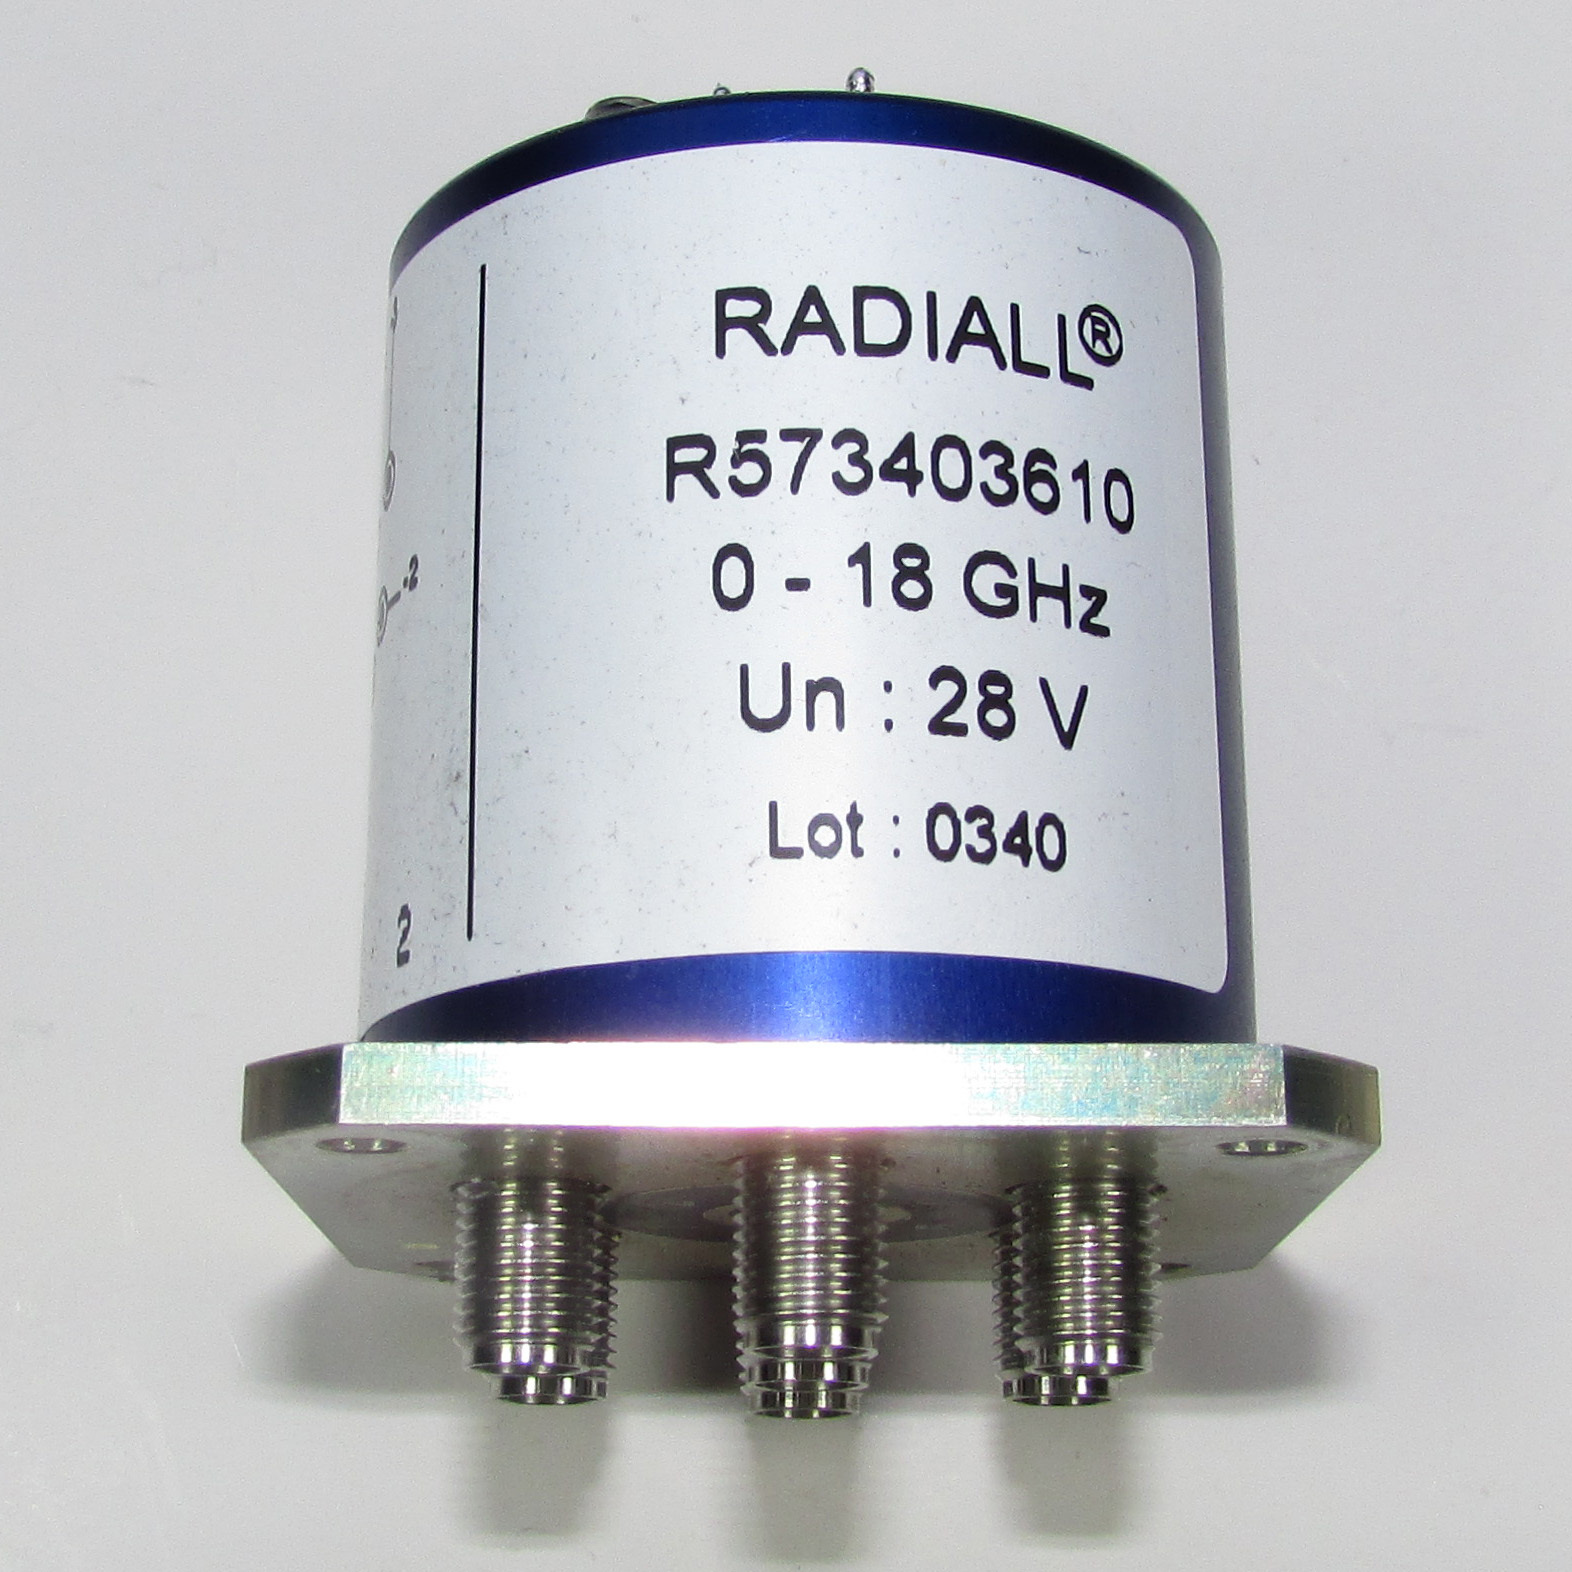 RADIALL R573403610 DC-18GHz 28V SMA RF microwave single pole six throw coaxial switch